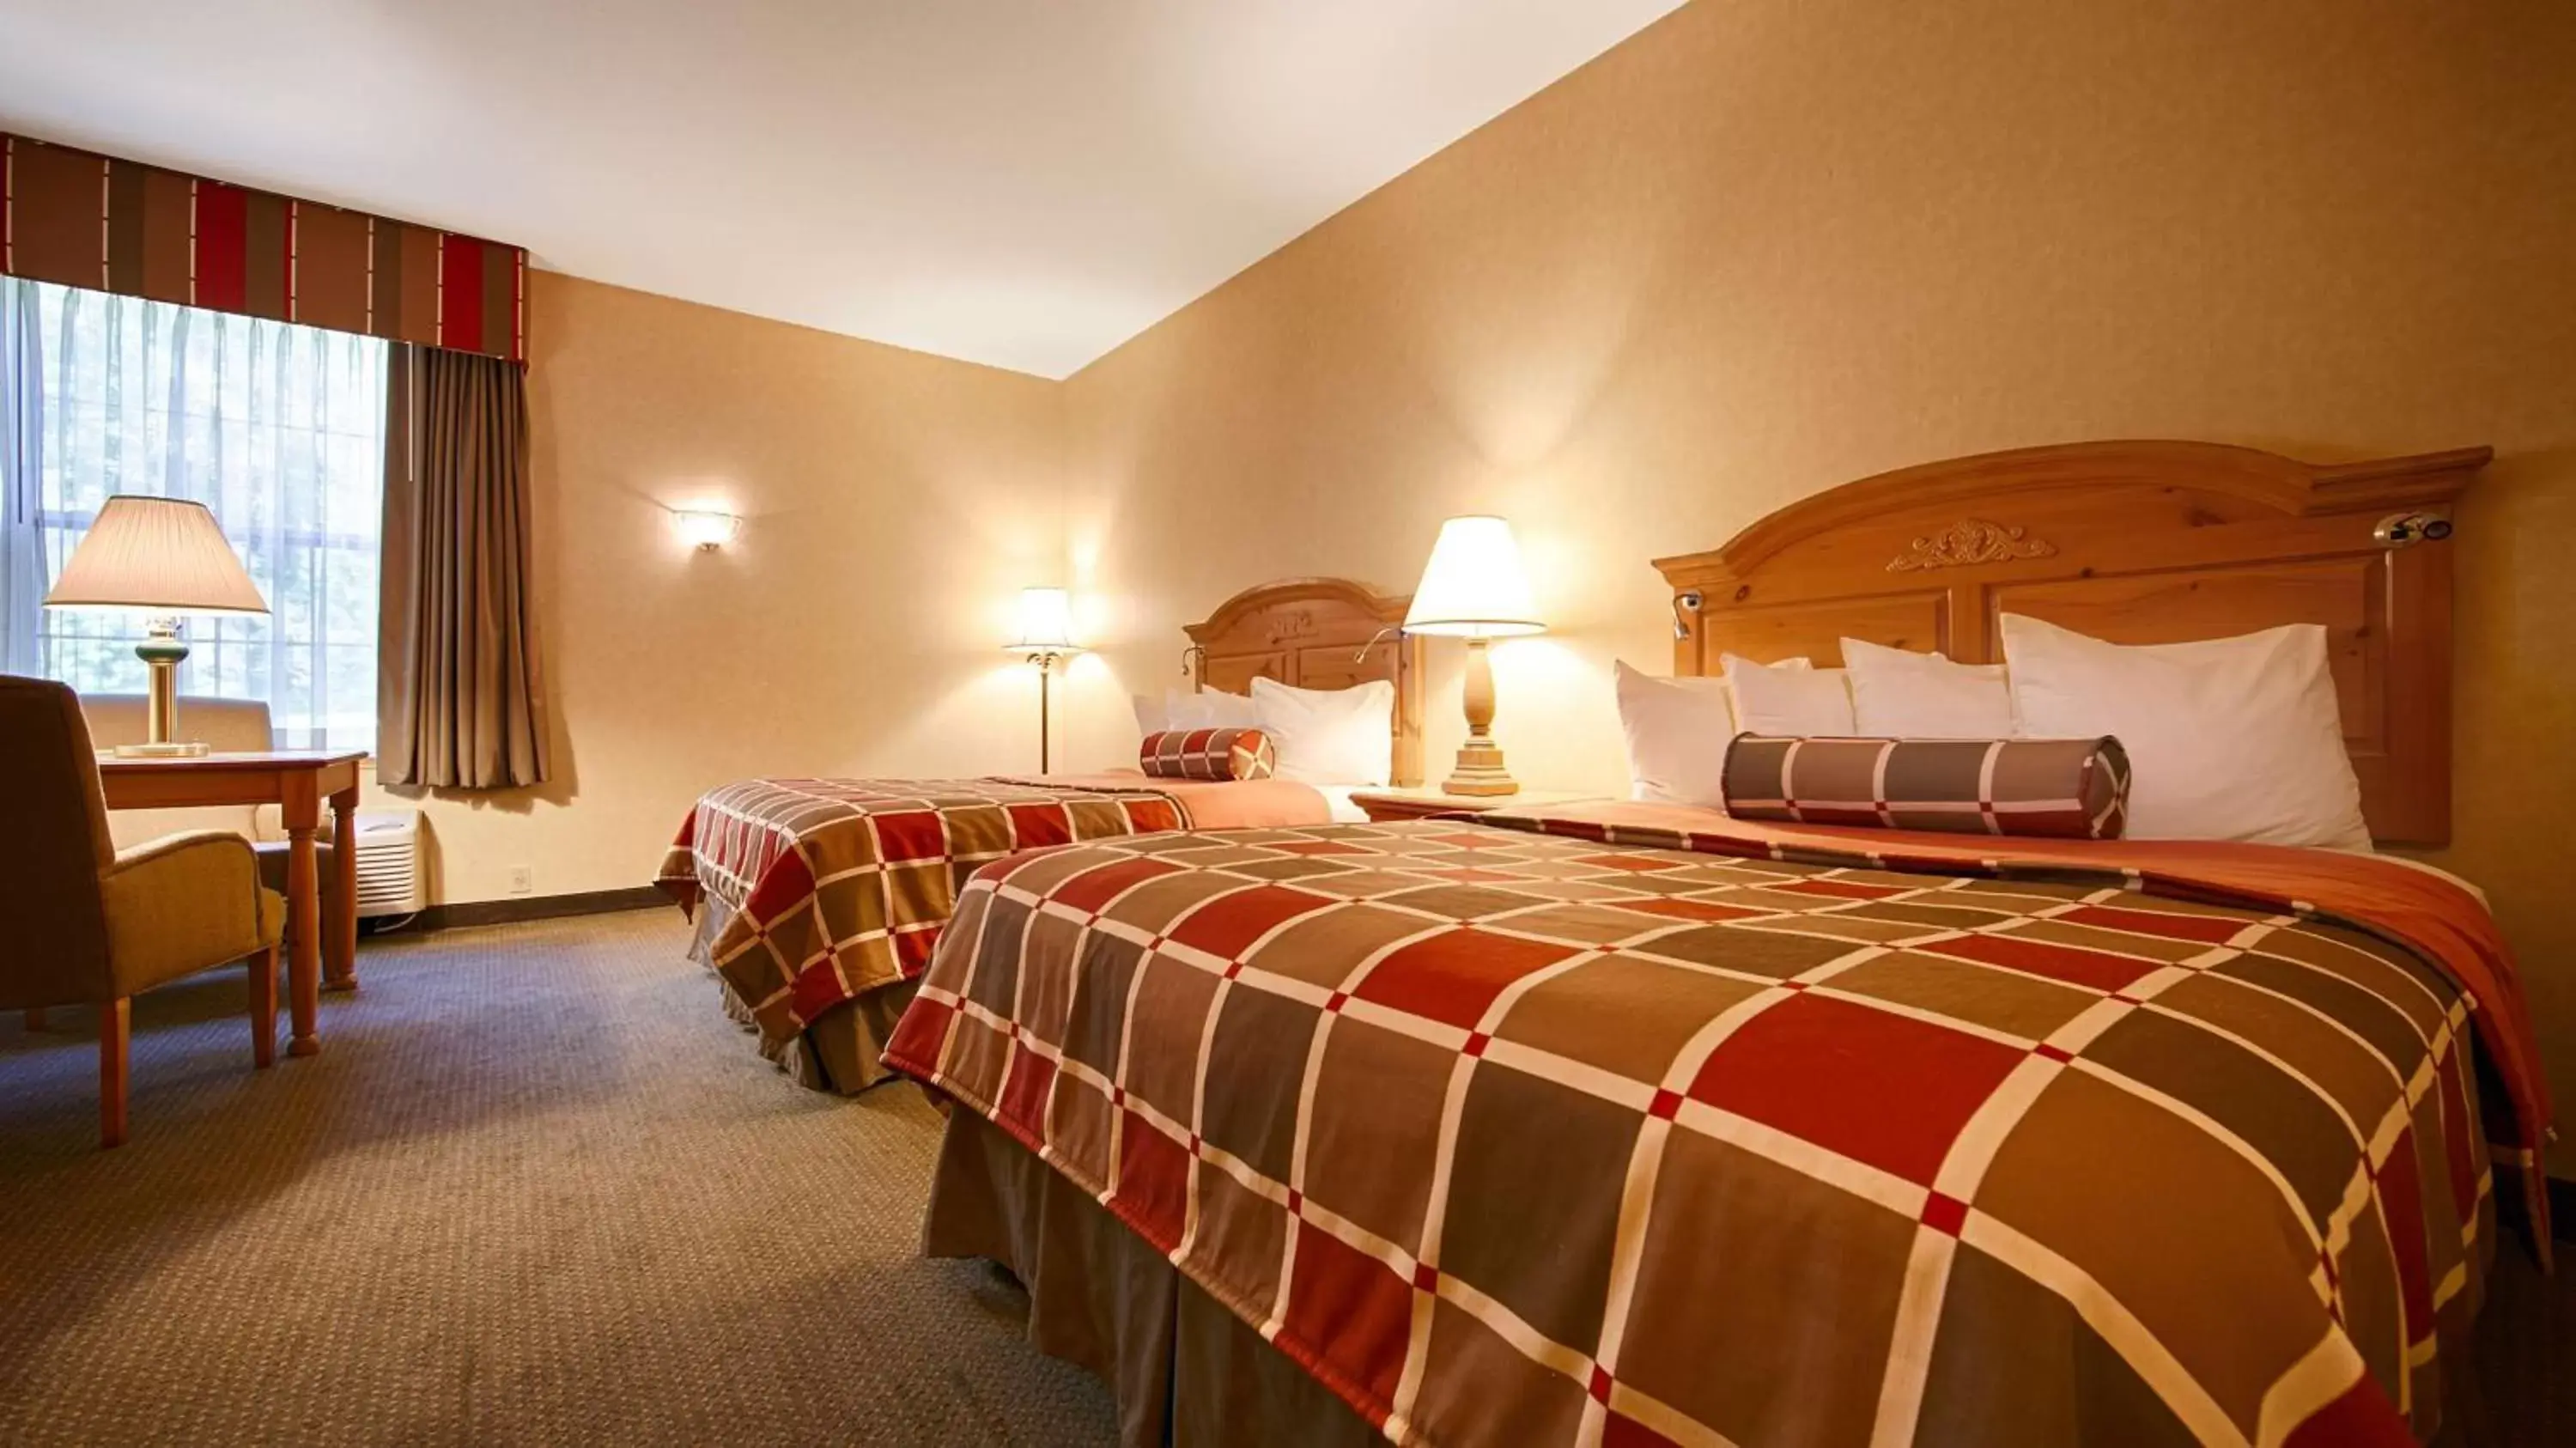 Queen Room with Two Queen Beds - Non-Smoking in Best Western PLUS Revere Inn & Suites